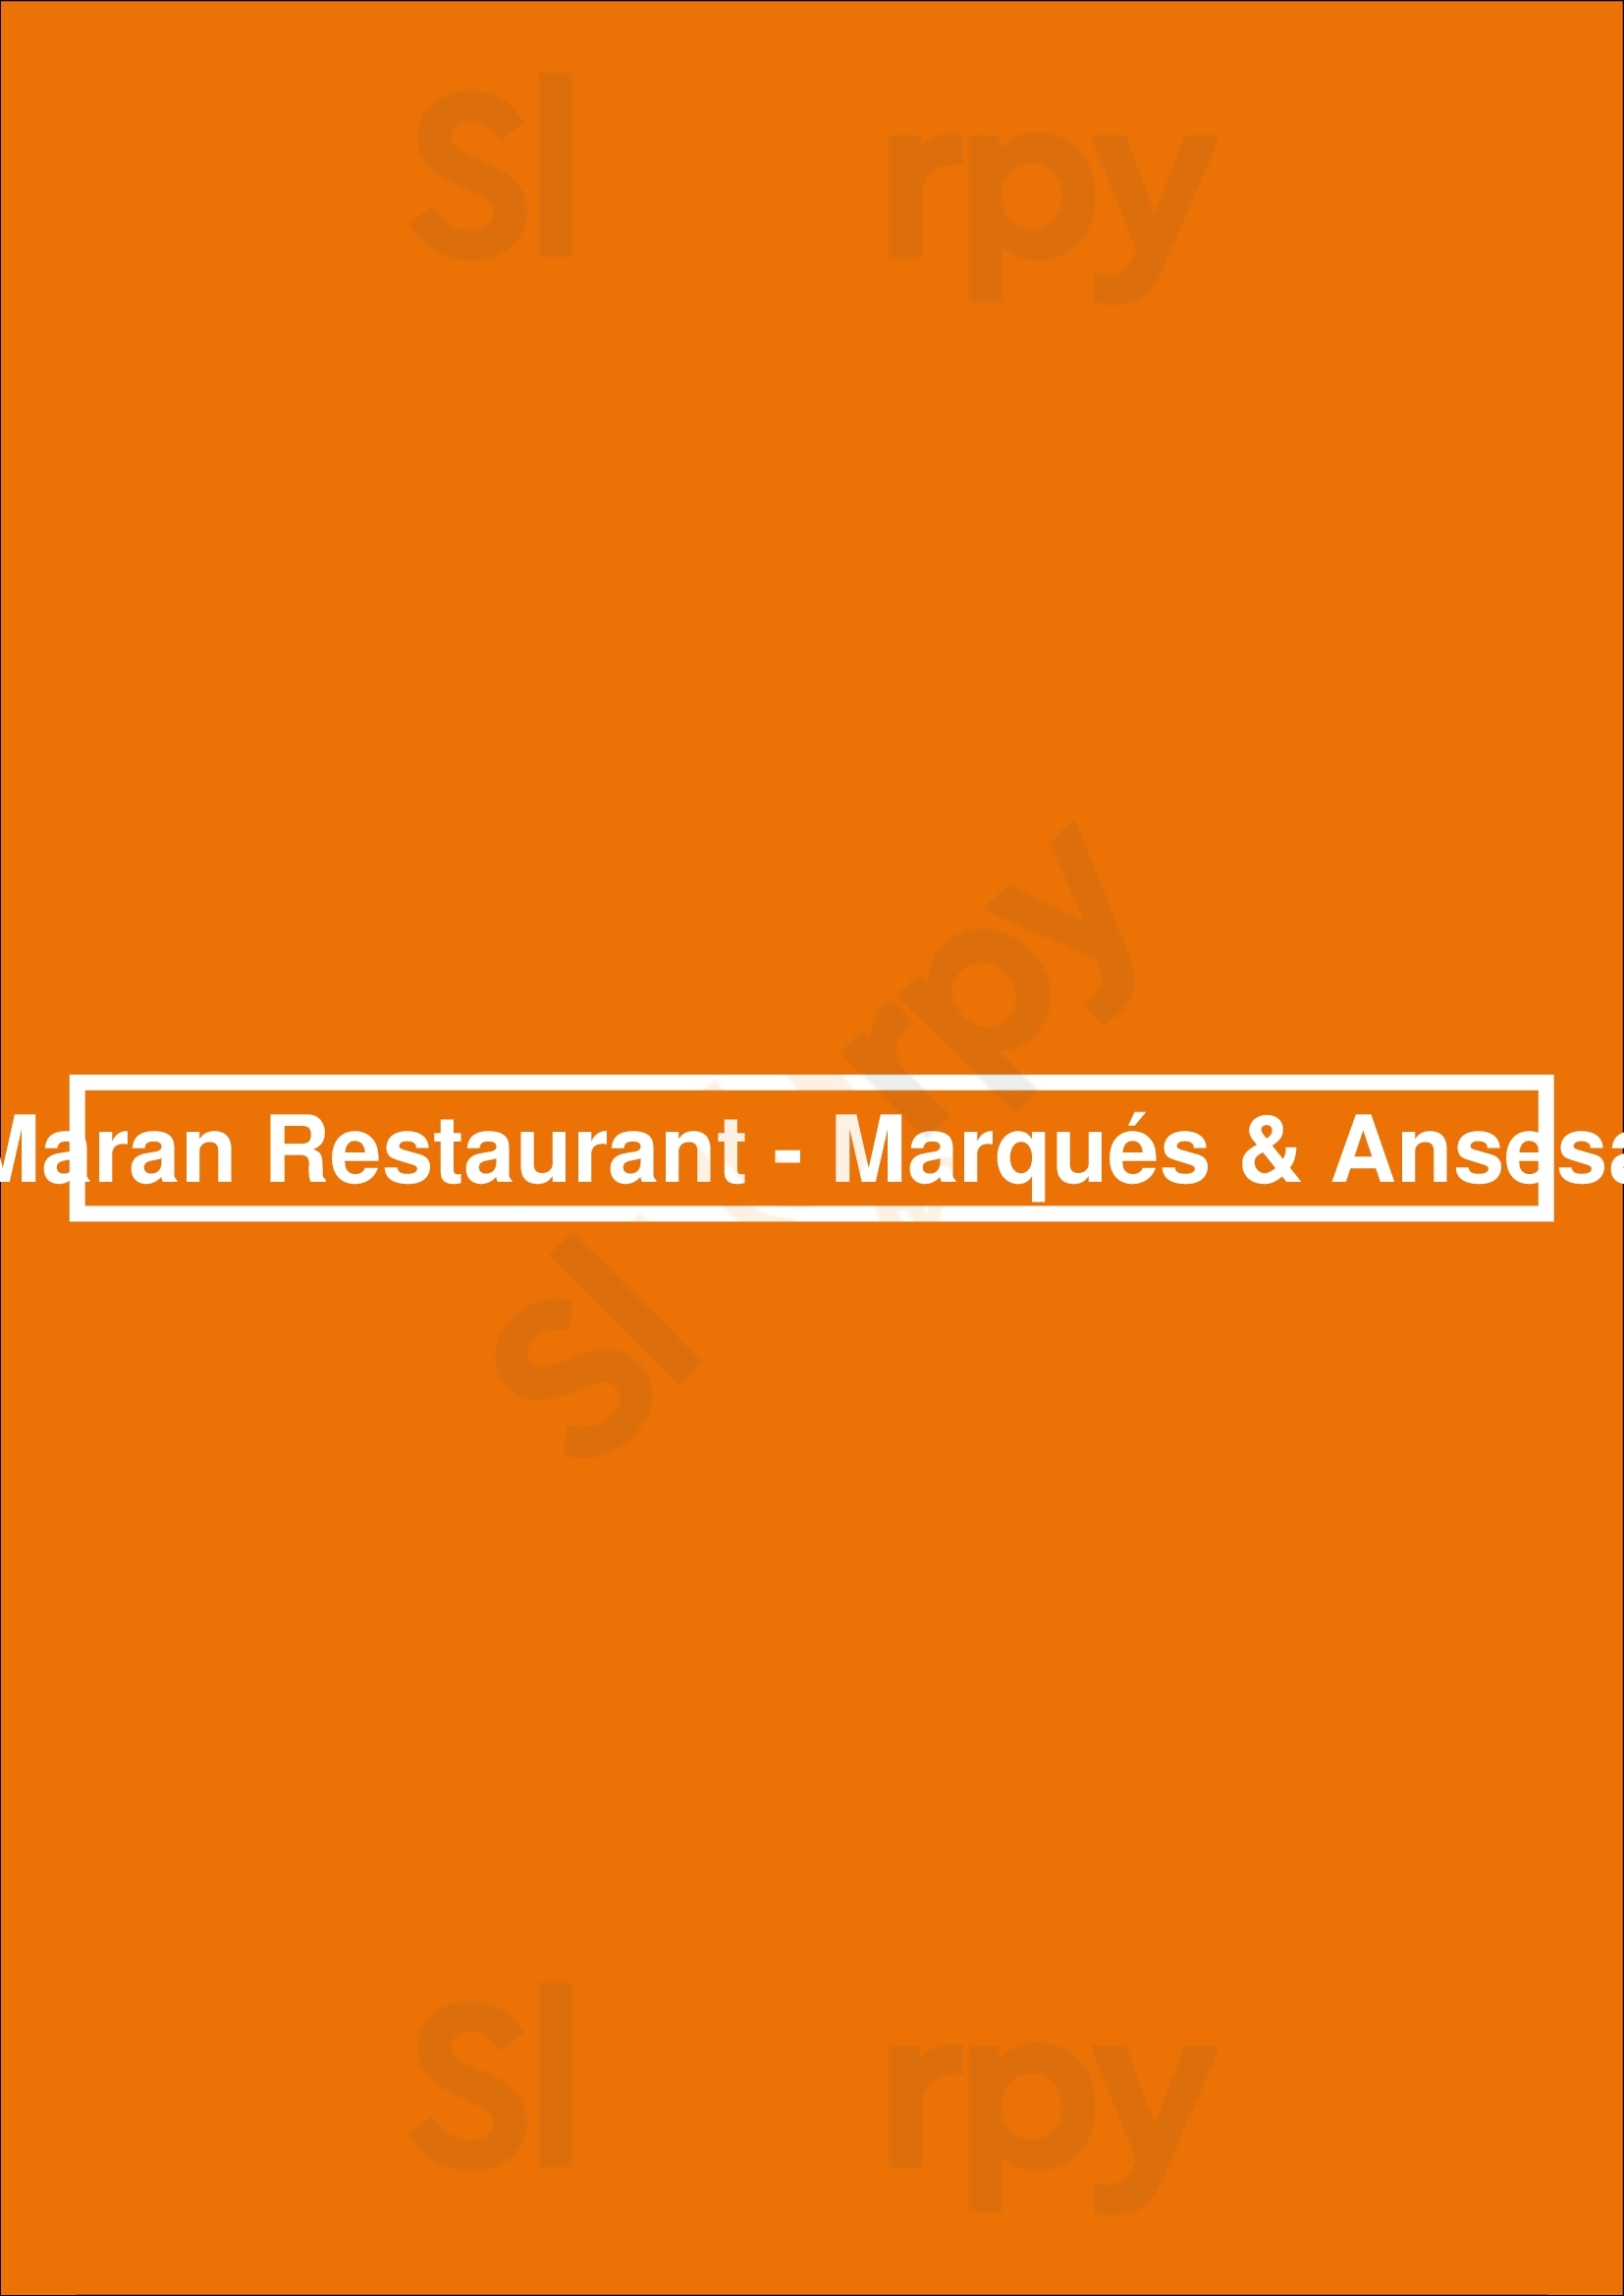 Maran Restaurant - Marqués & Ansesa Girona Menu - 1